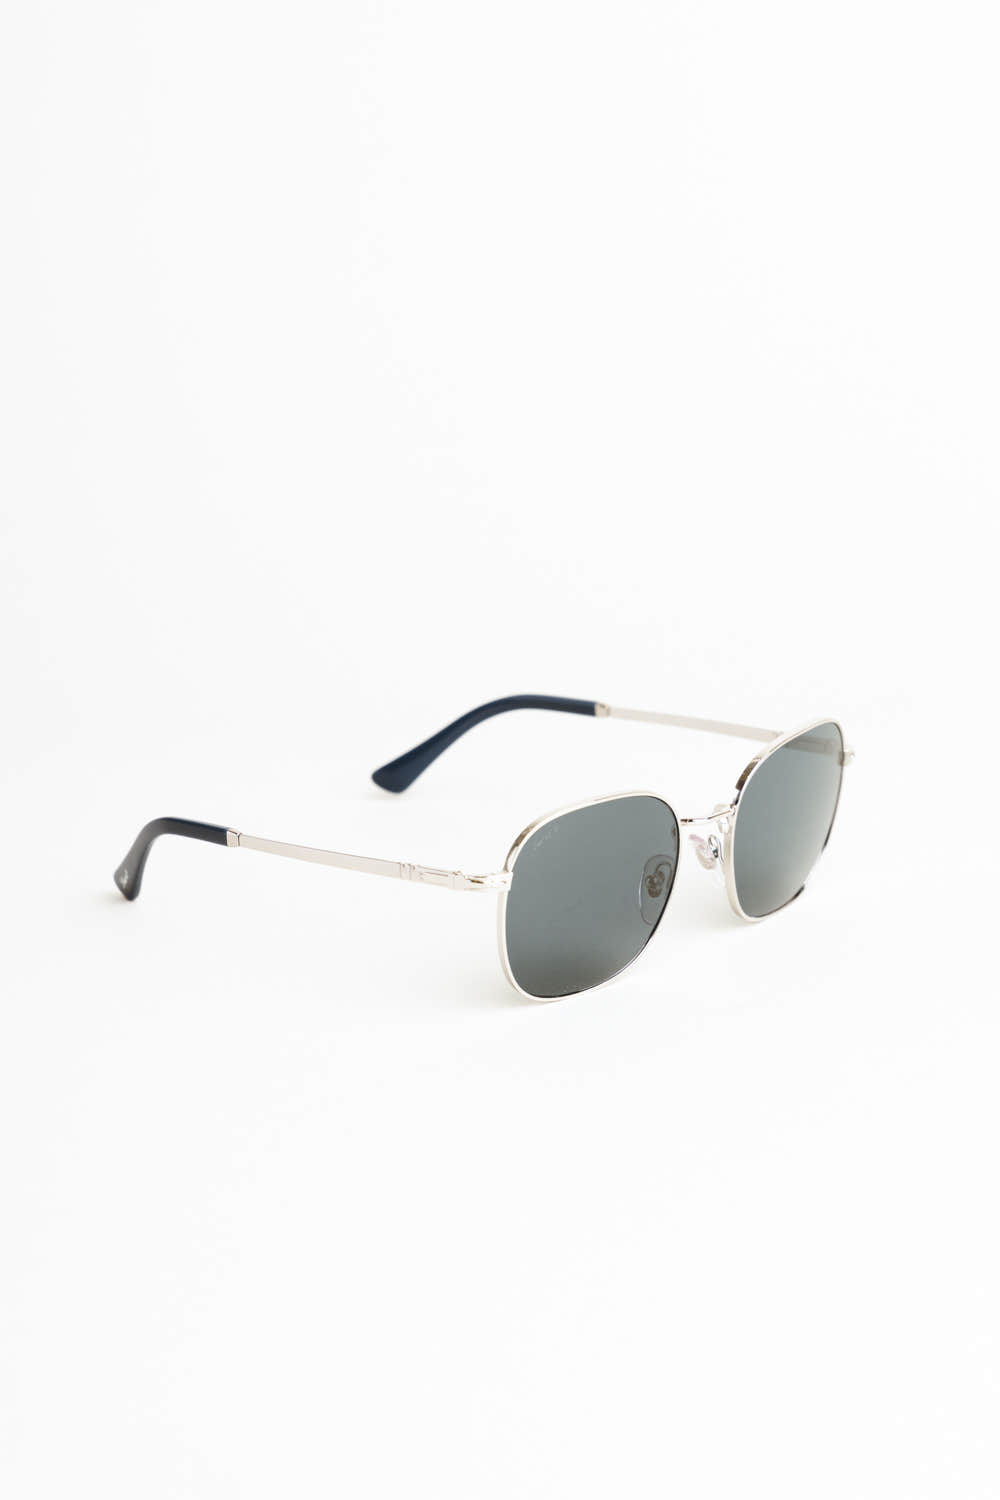 Men's Polarized Sunglasses Silver light blue